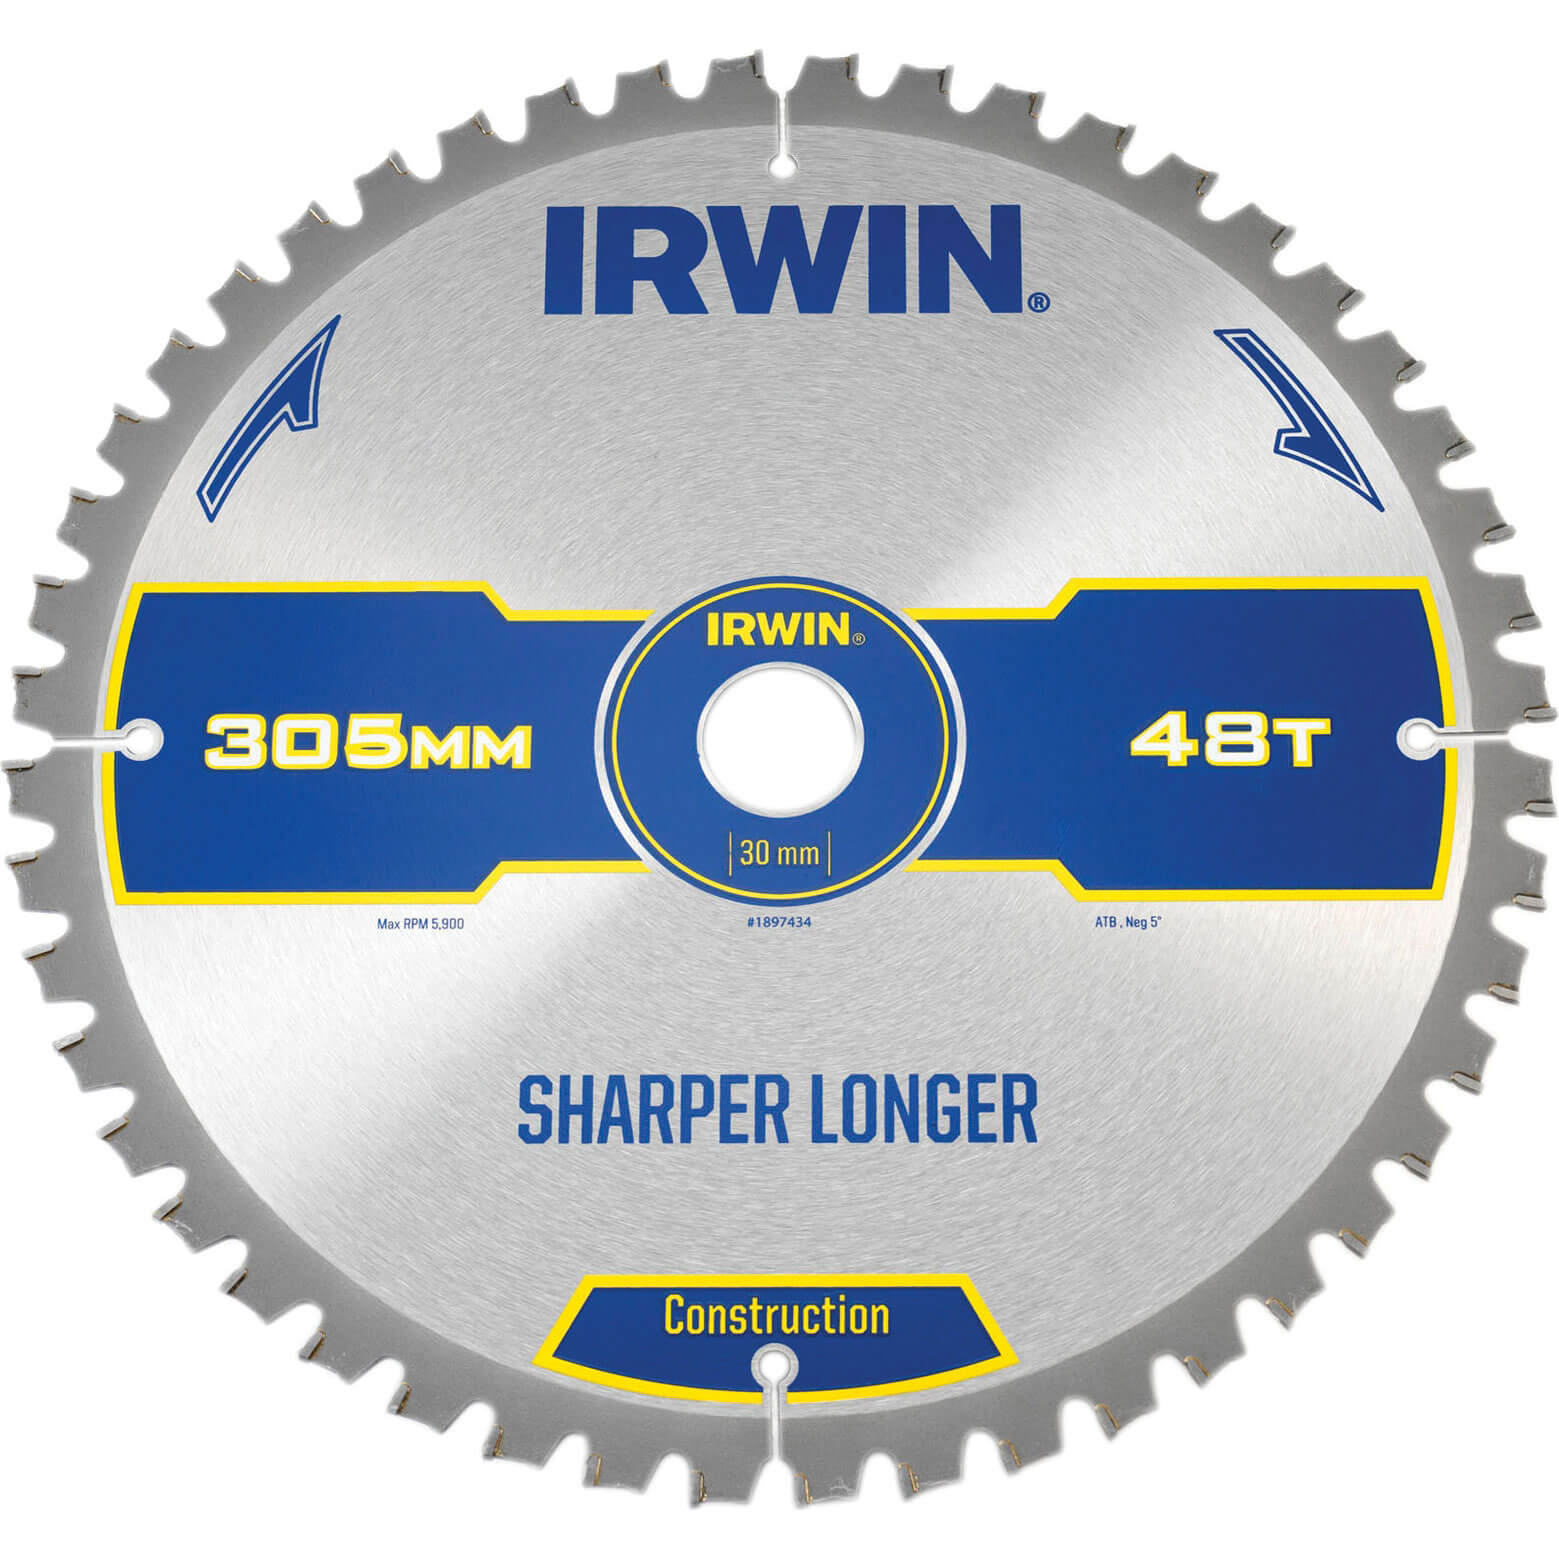 Irwin ATB Ultra Construction Circular Saw Blade 305mm 48T 30mm